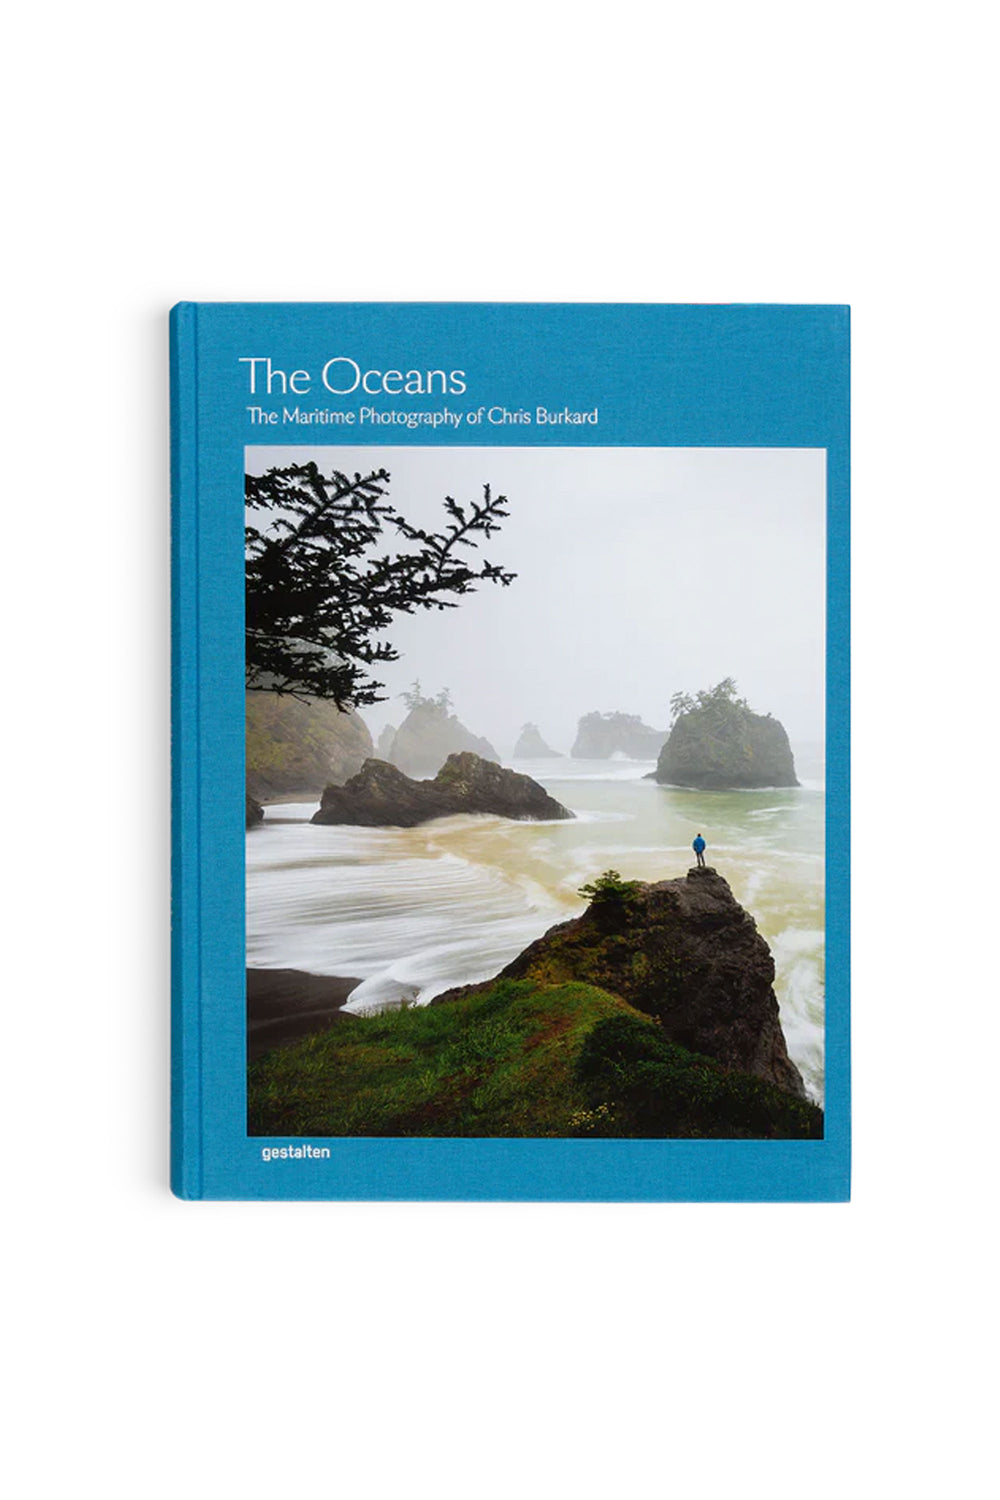 Pukas-Surf-Shop-geltalten-the-oceans-book